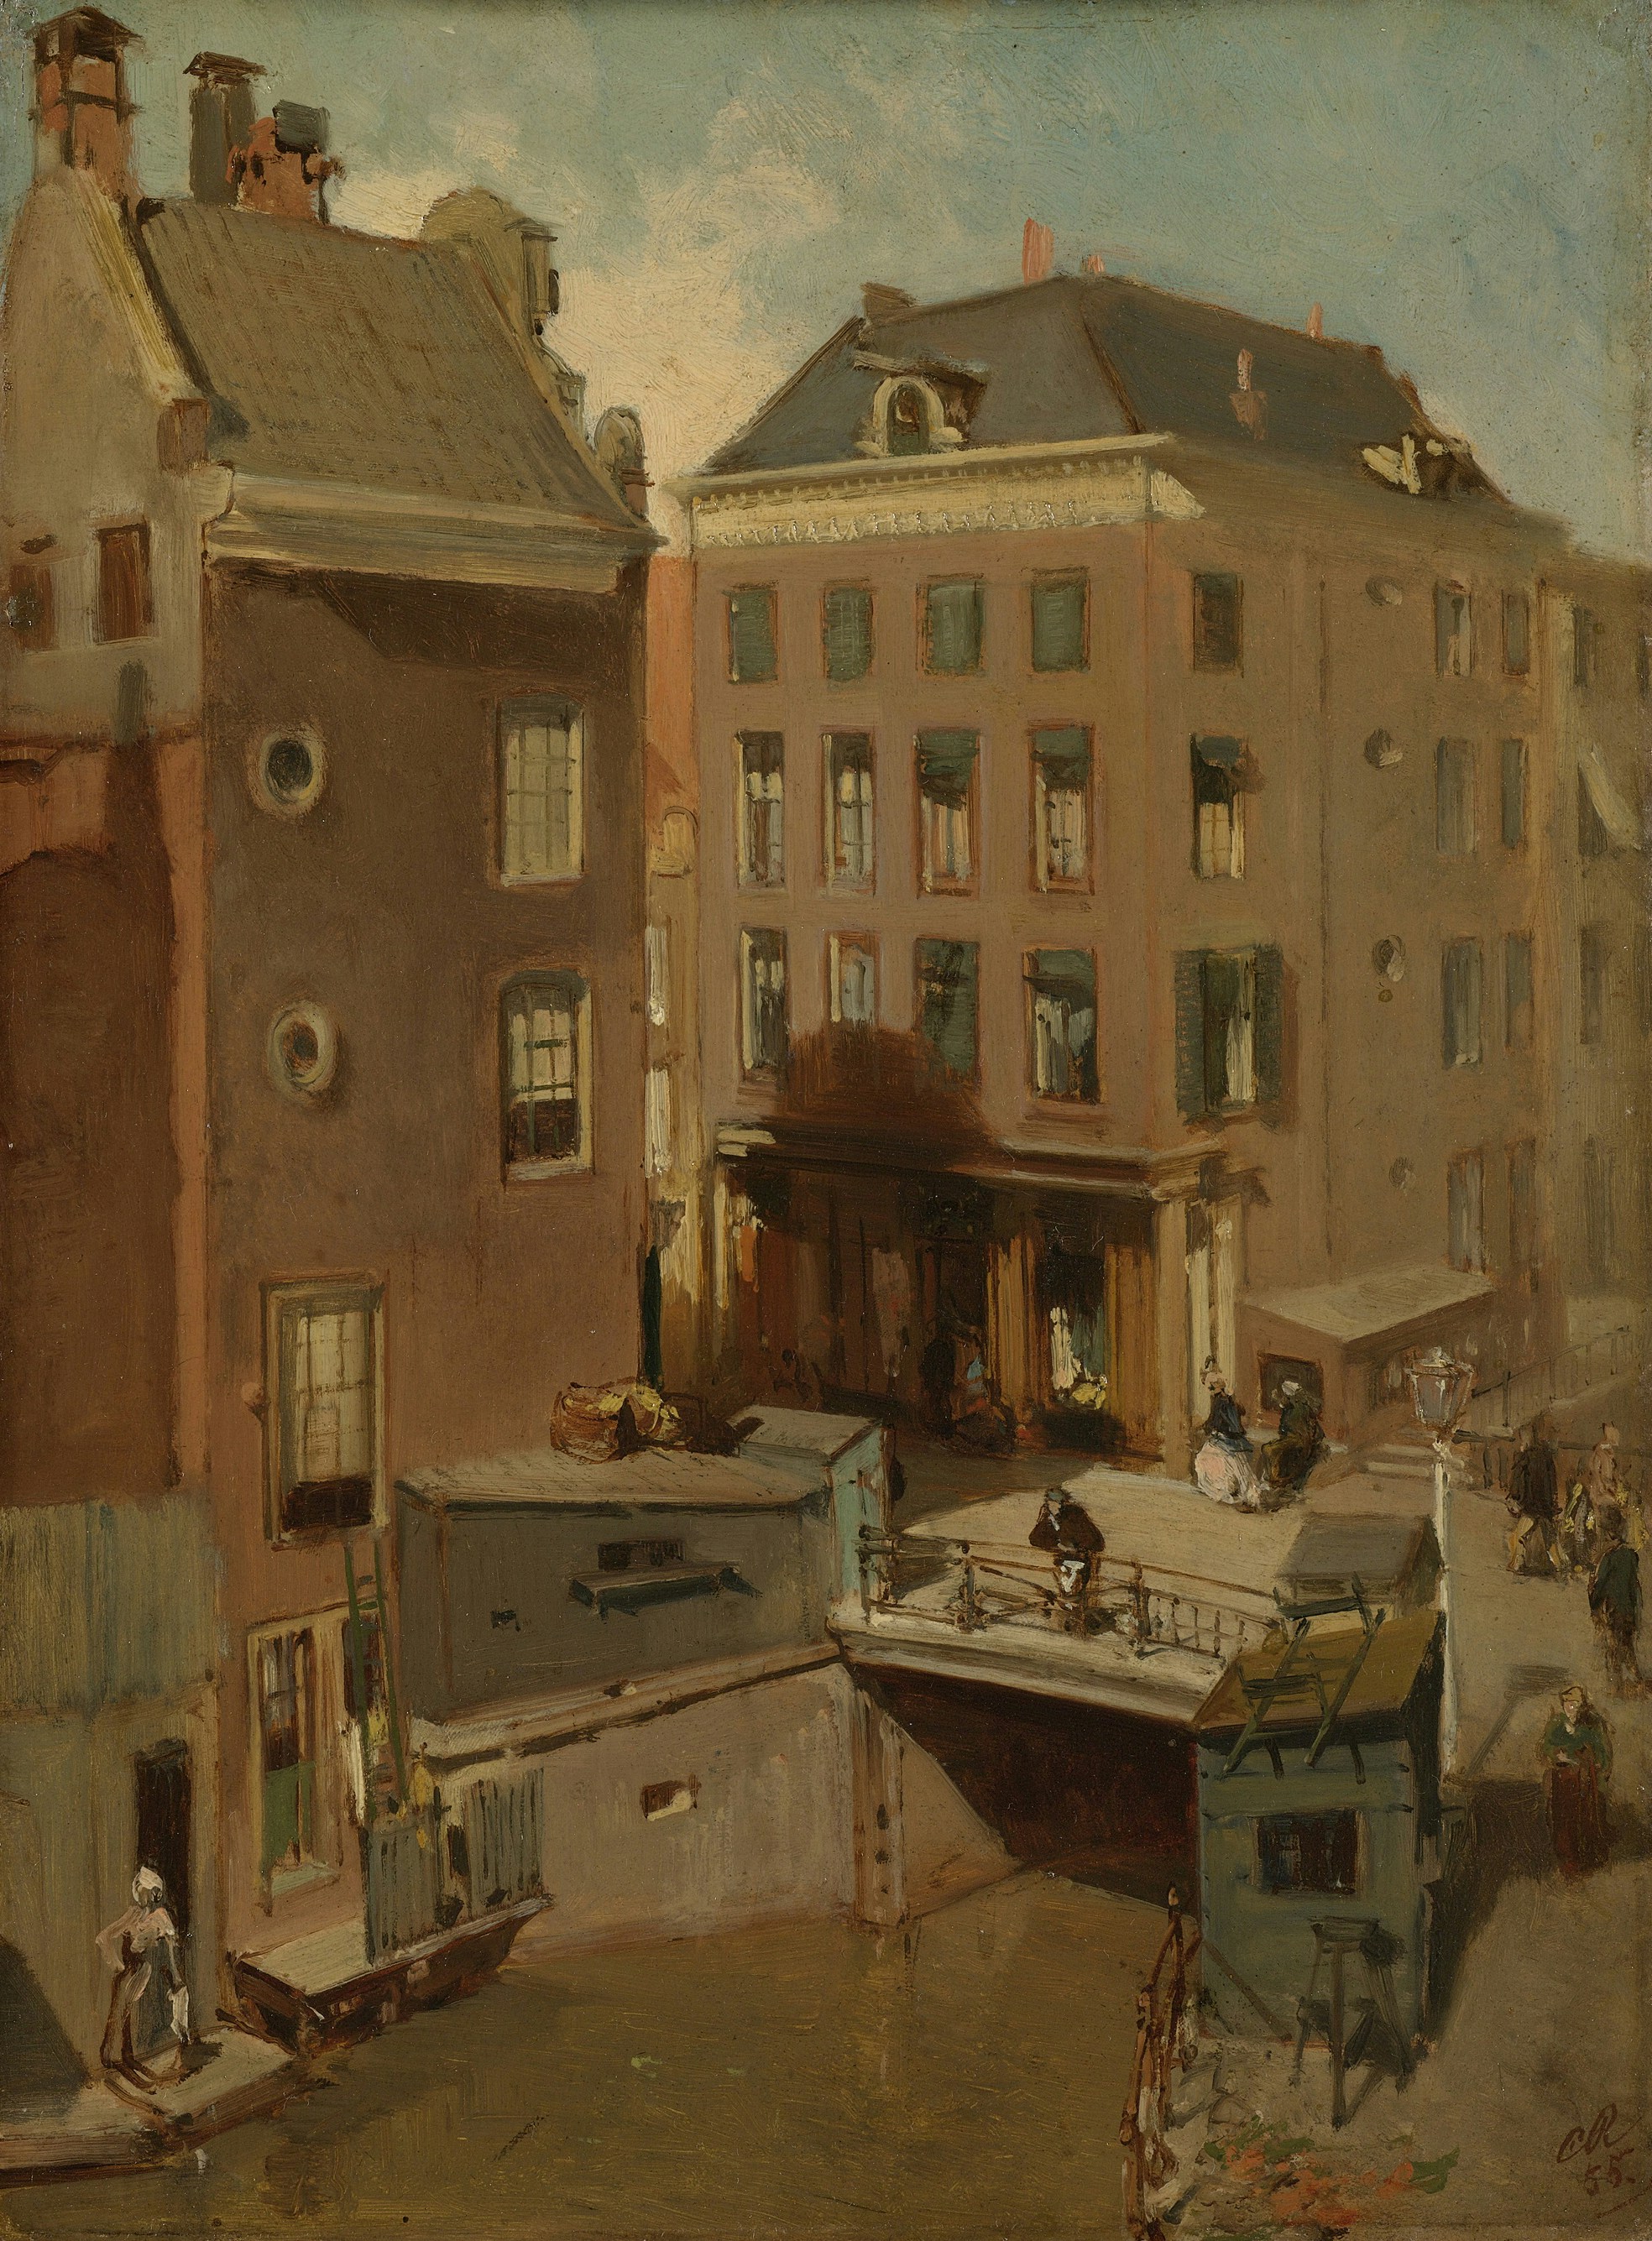 Title: The Osjessluis near Kalverstraat in Amsterdam. Date: 1855. Institution: Rijksmuseum. Provider: Rijksmuseum. Providing Country: Netherlands. Public Domain